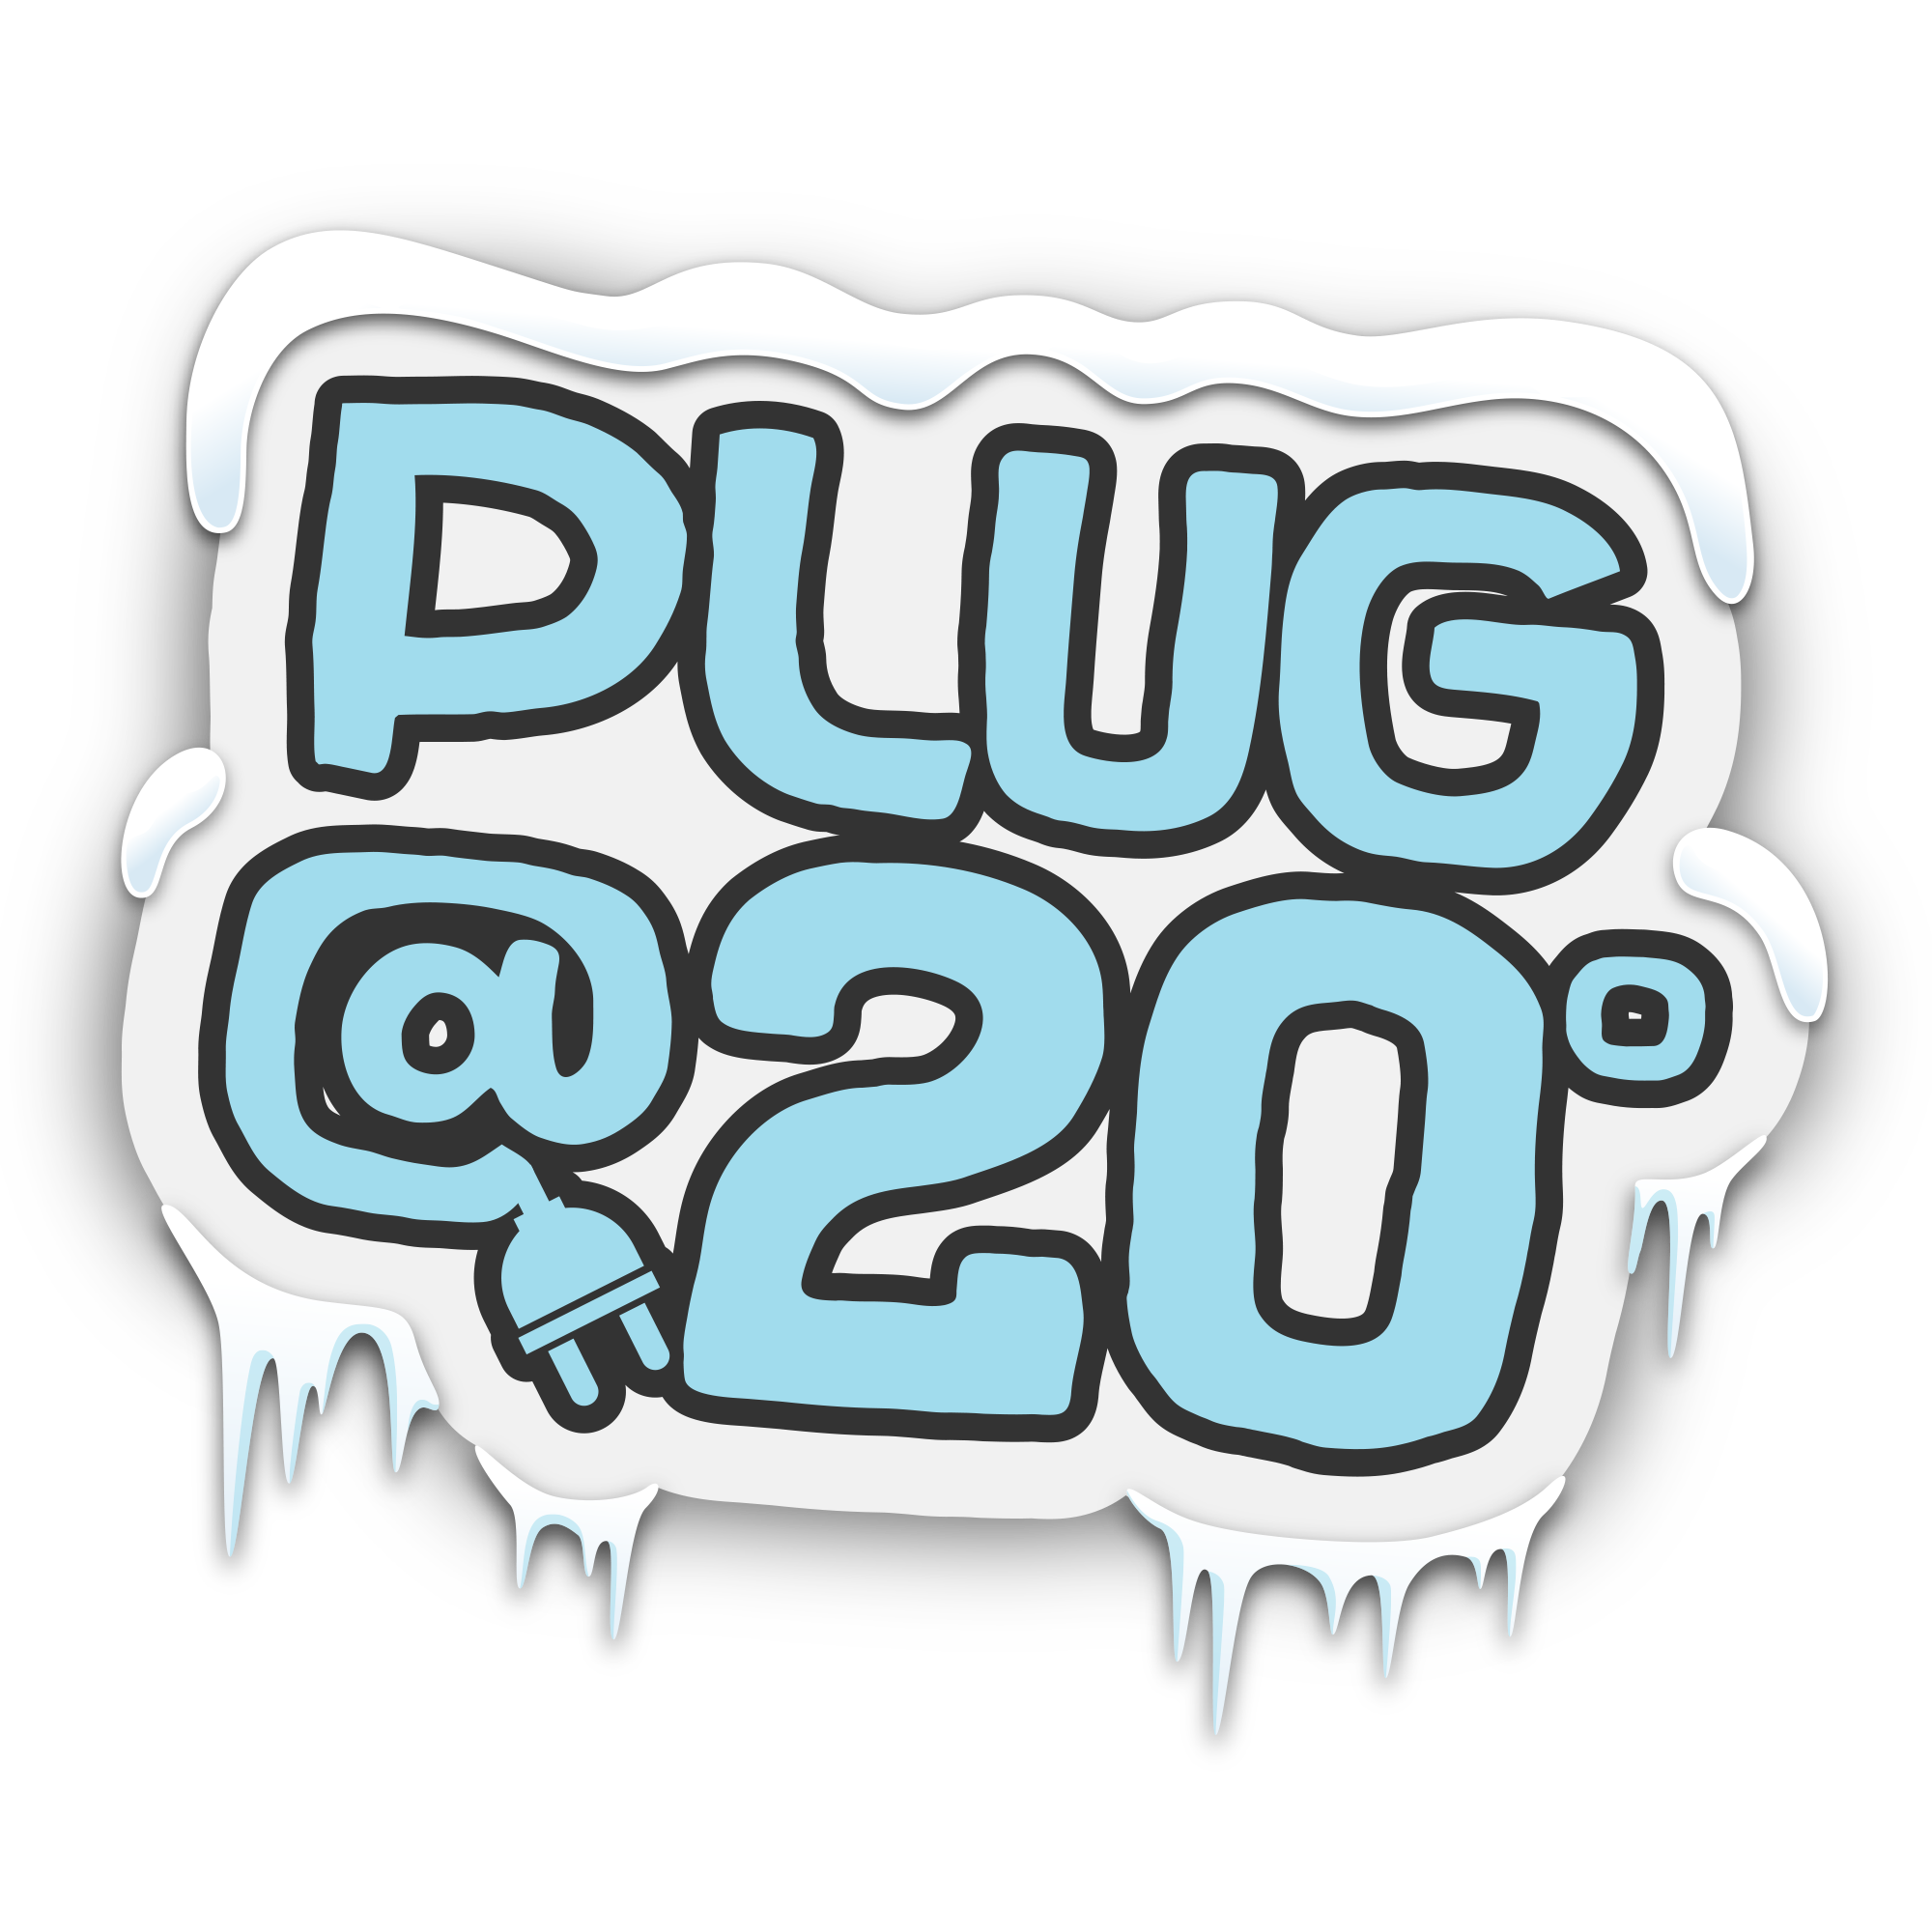 Plug@20 Logo.png